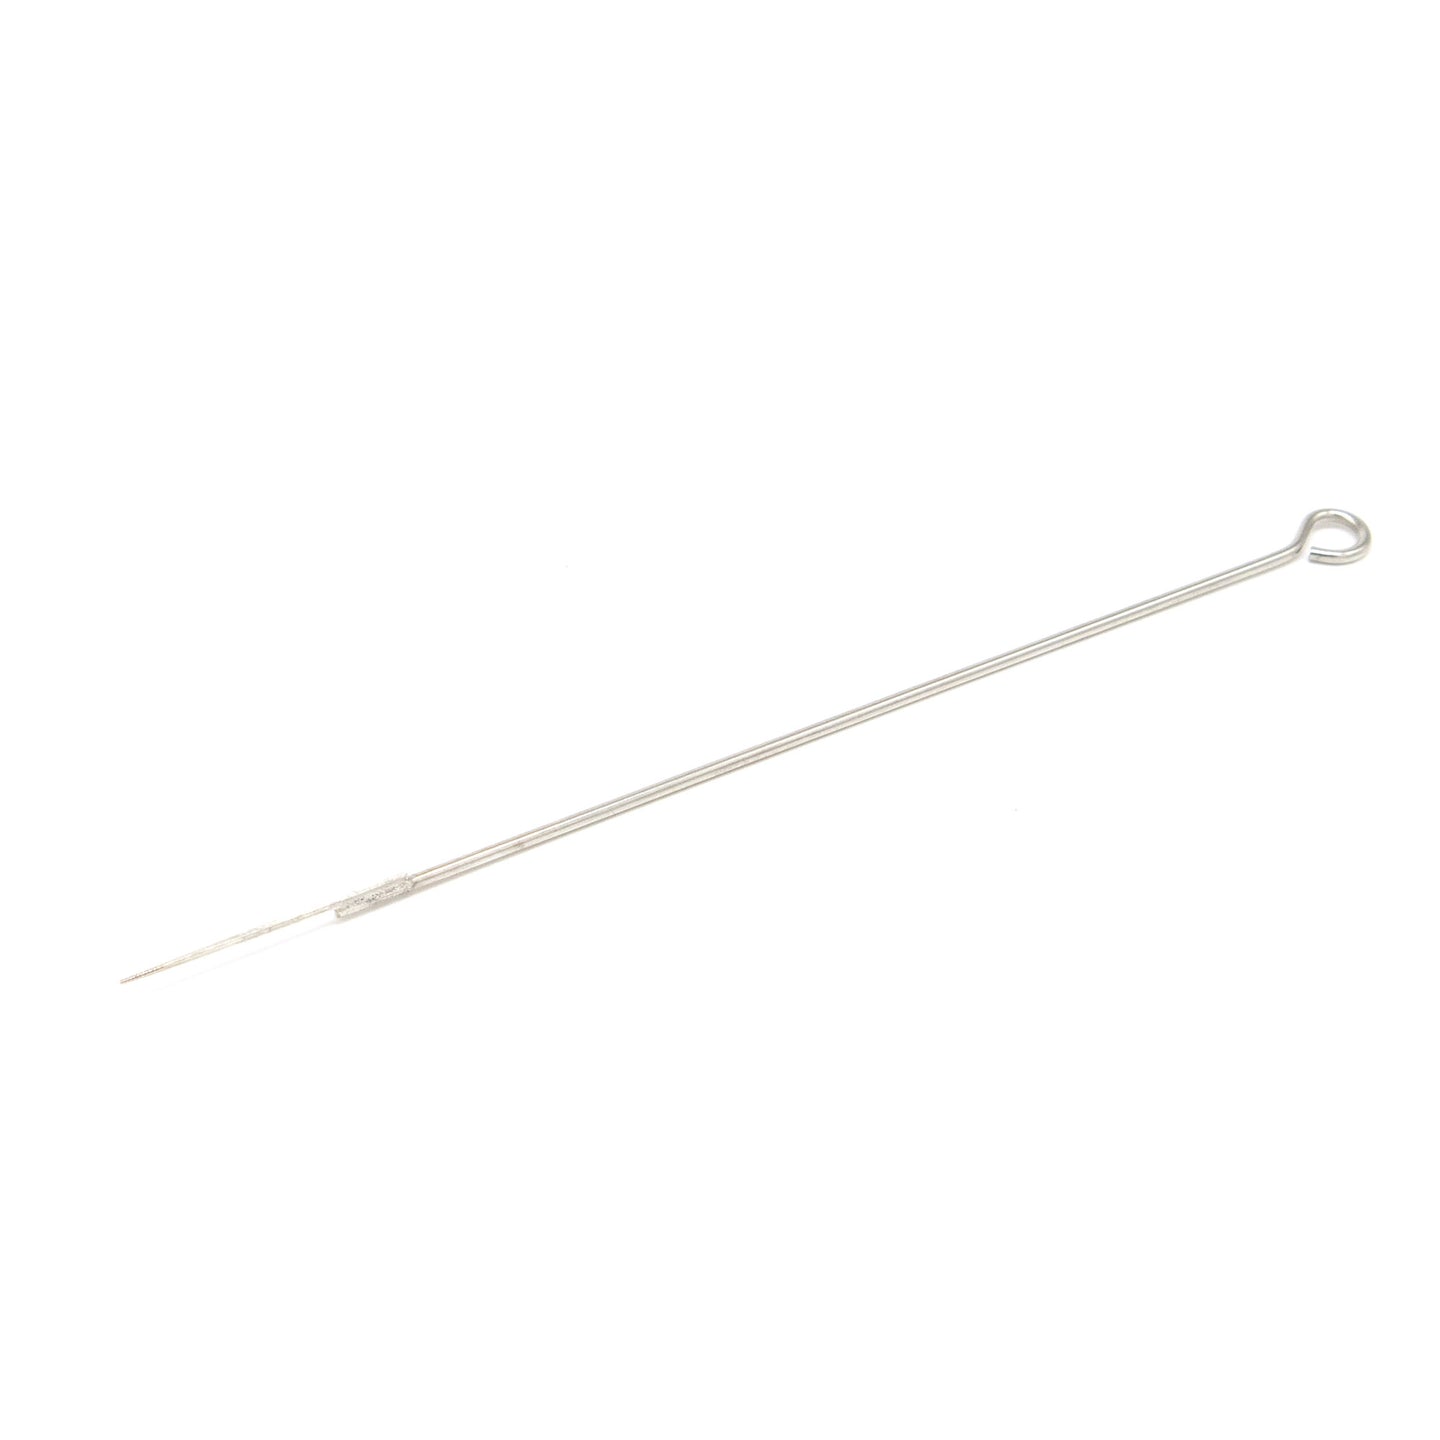 Tight 10g (Bugpin) liner needles